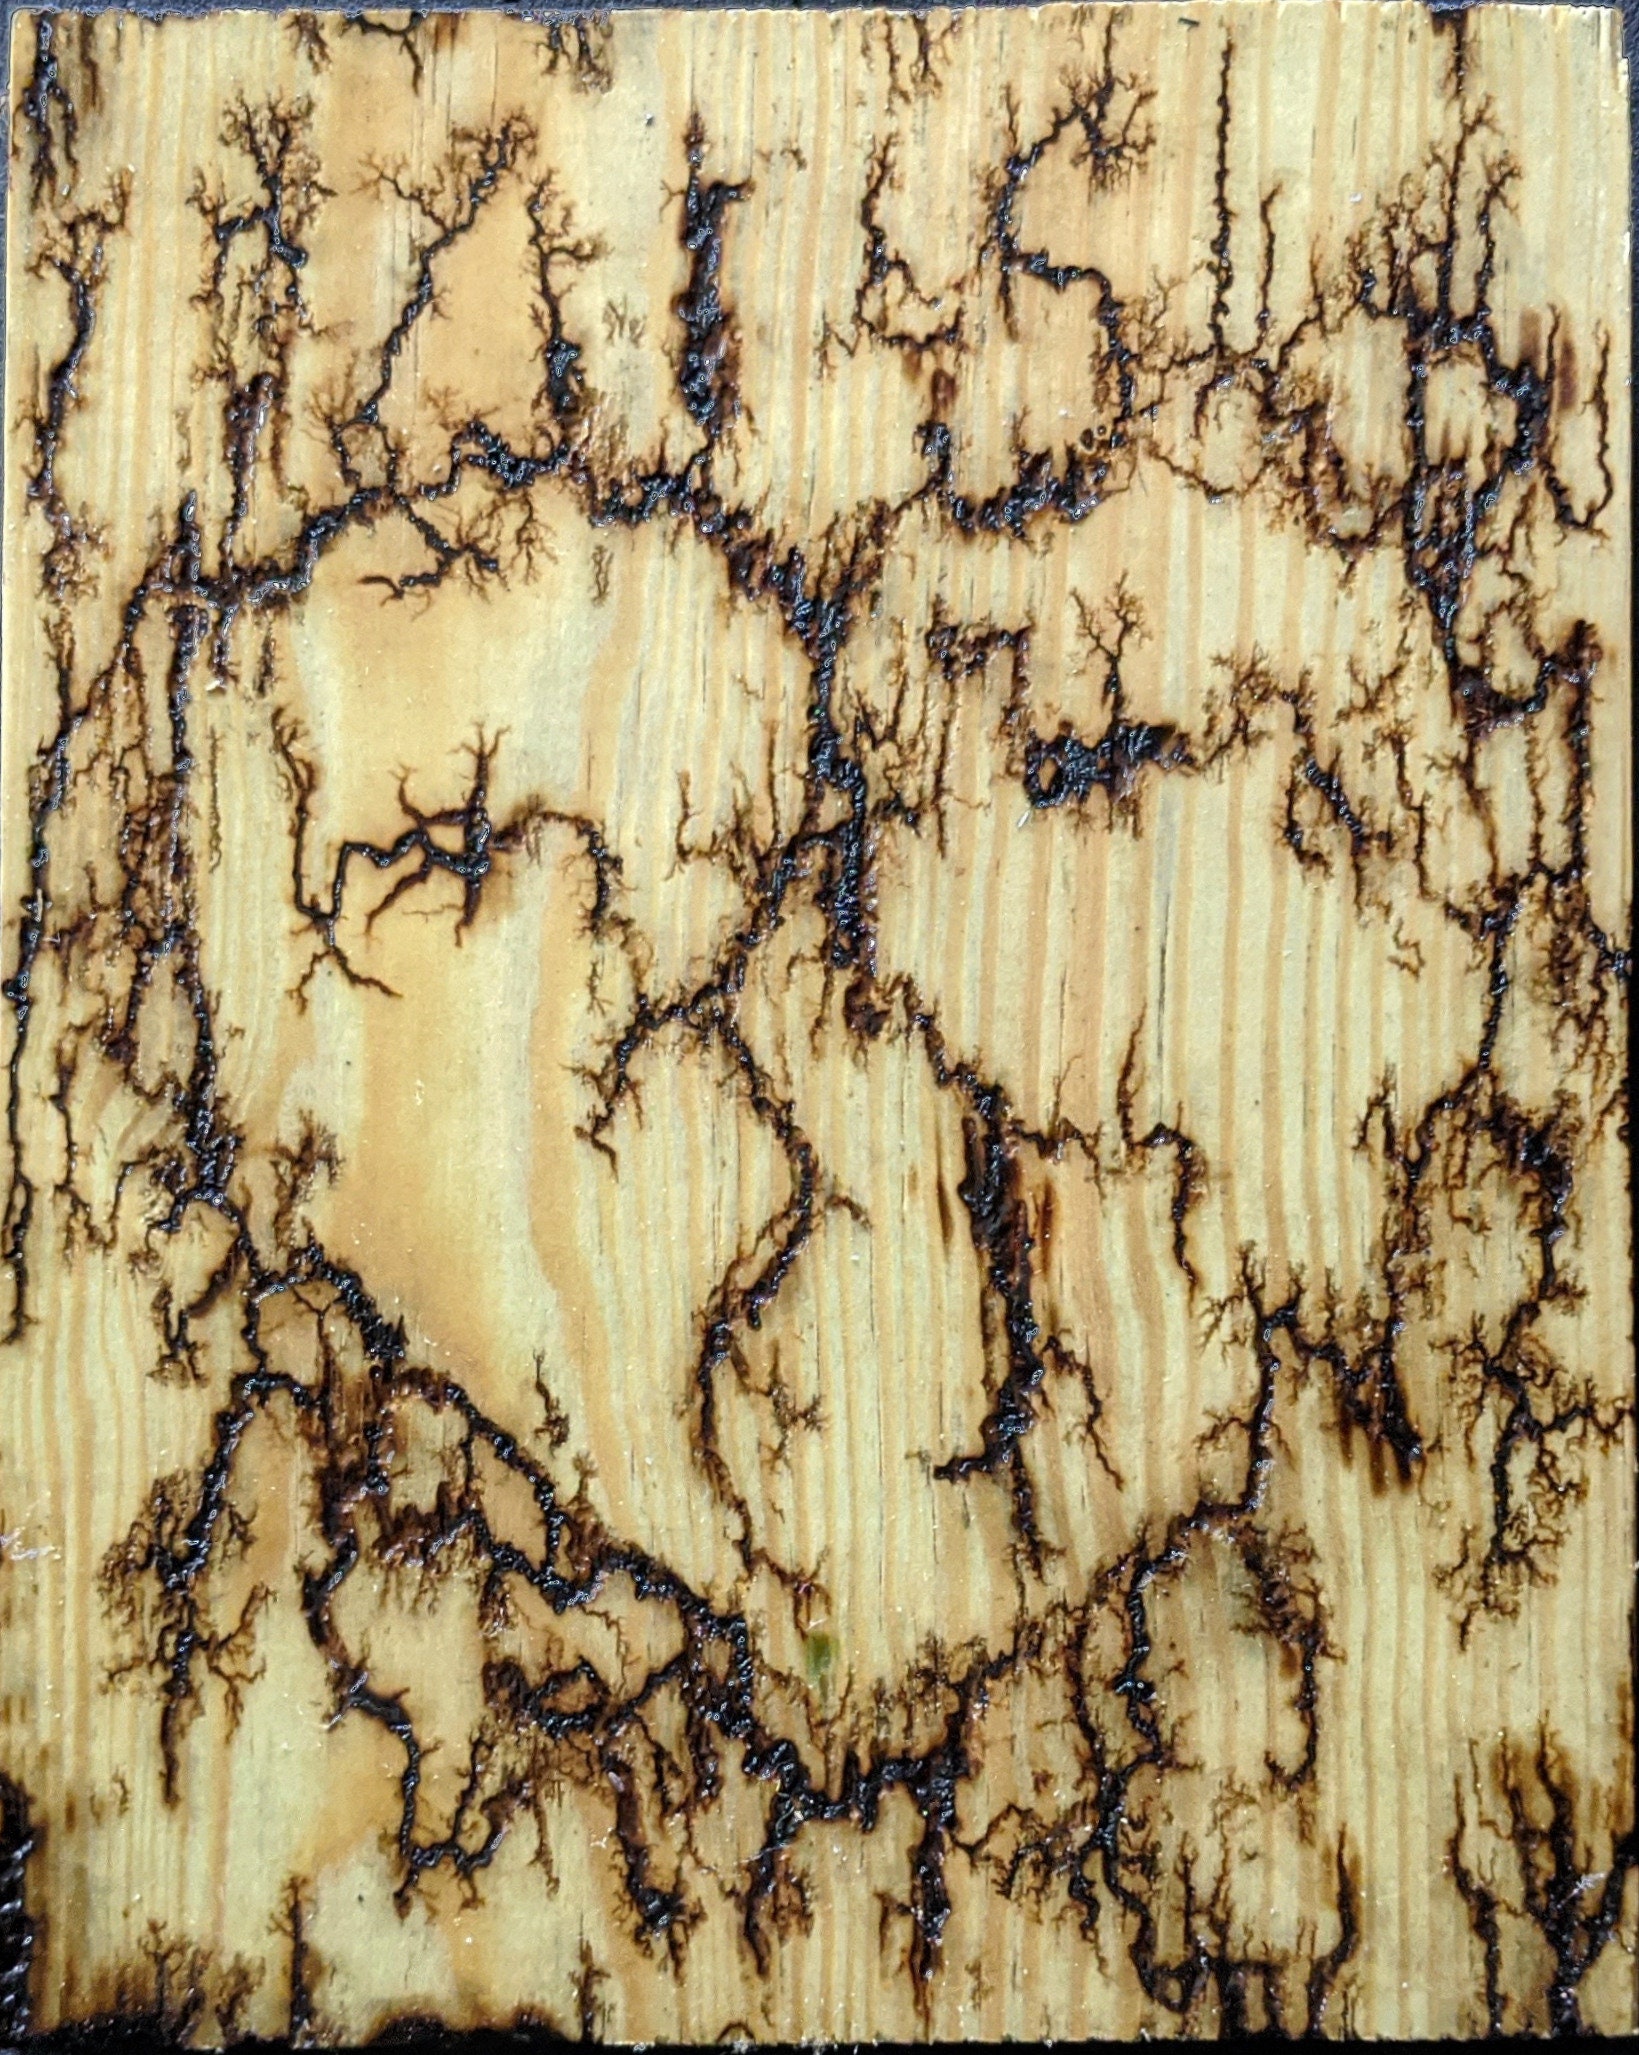 42 Lichtenberg Fractal Pattern - Wood burning with baking soda and